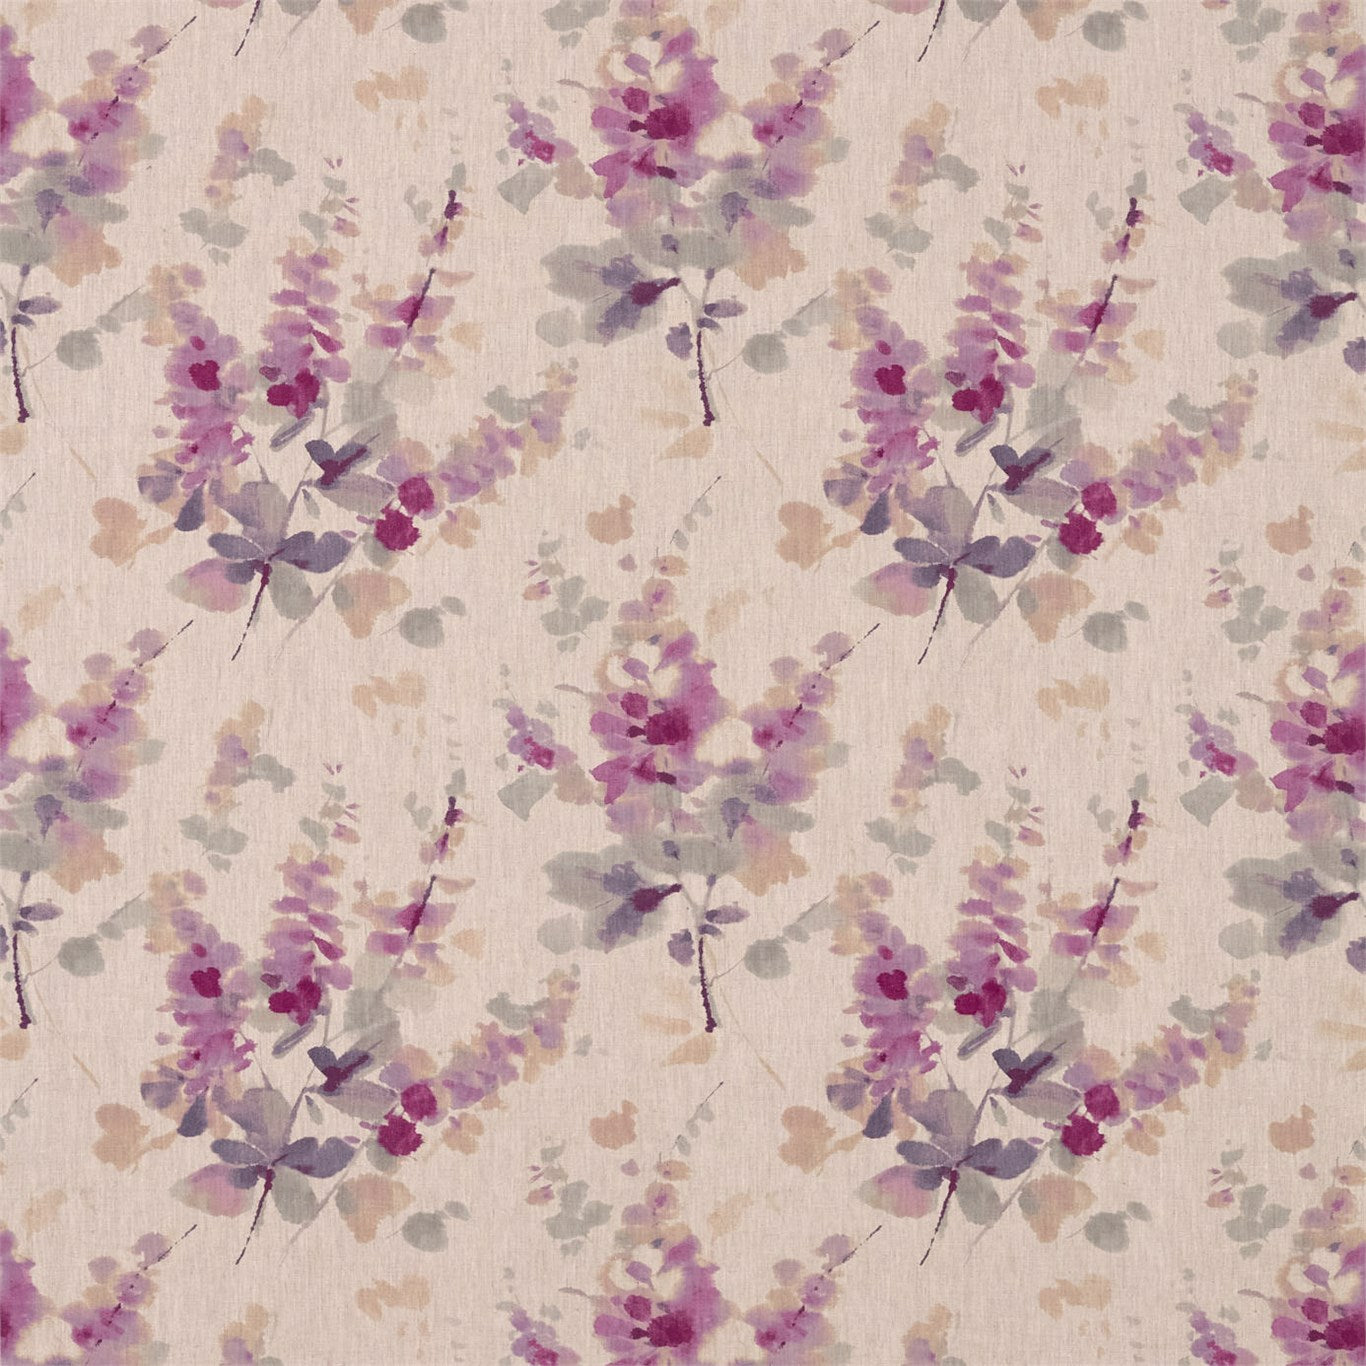 Delphiniums Fabric by Sanderson - DWAP226289 - Grape